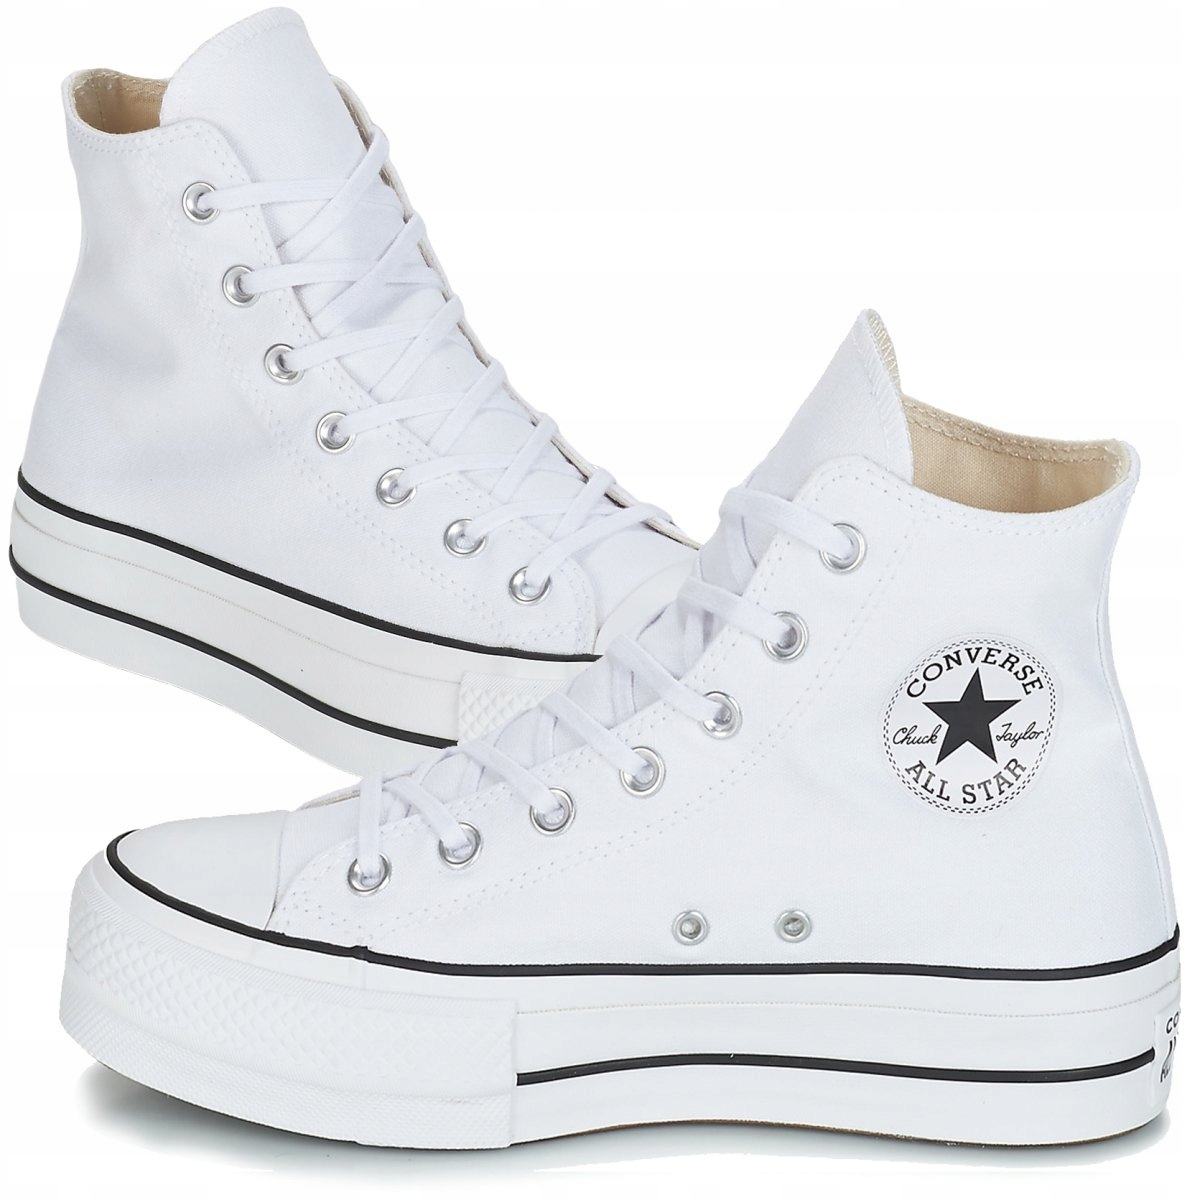 Converse All Star topánky tenisky biela platforma 36